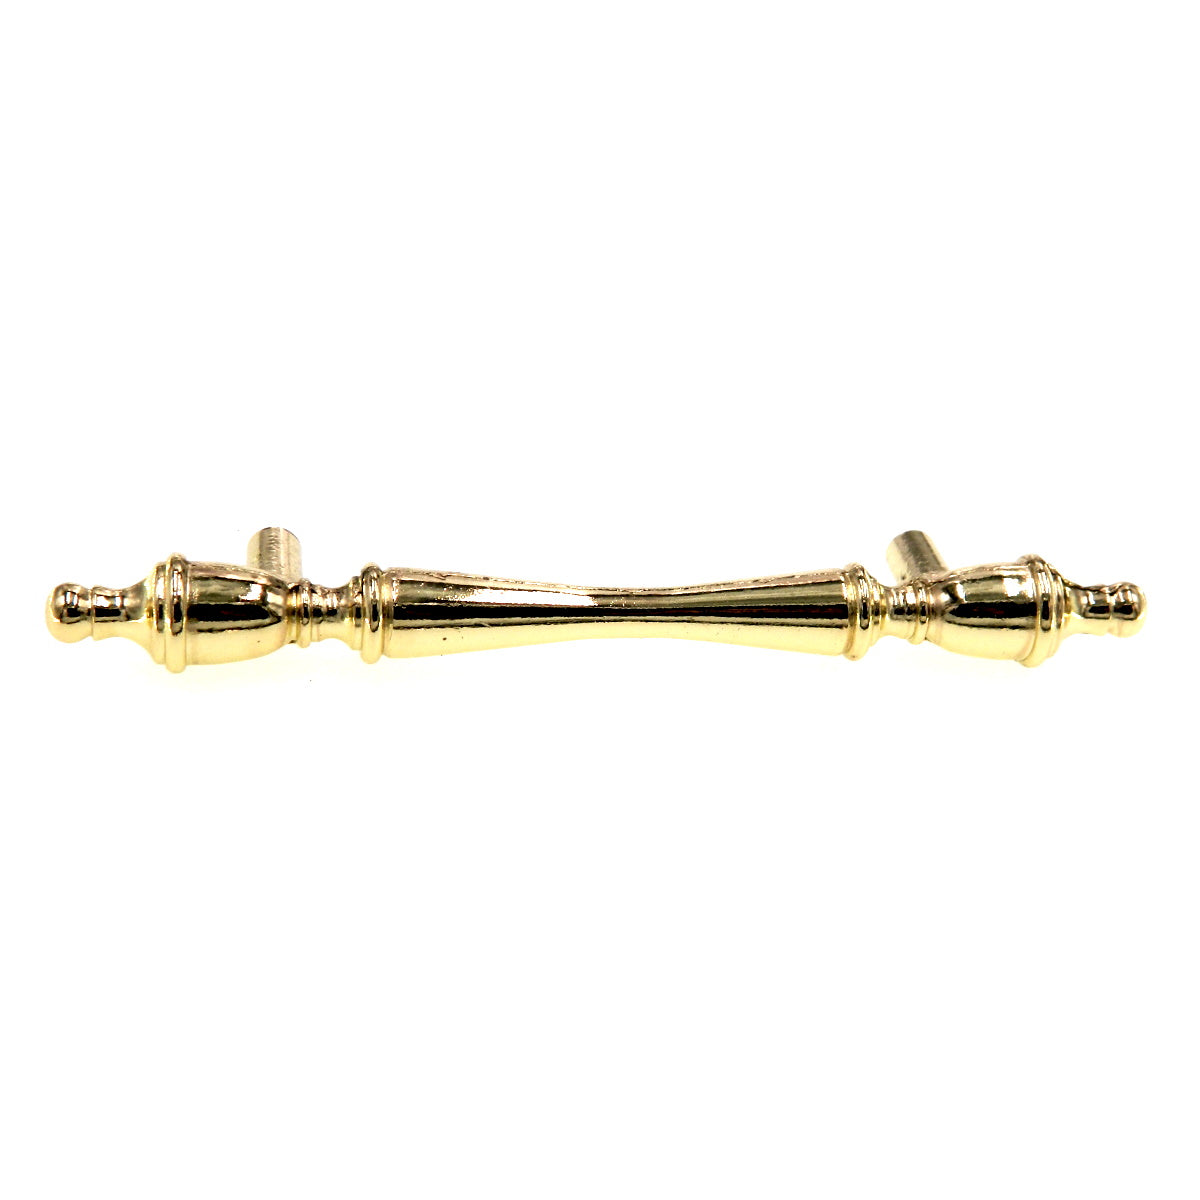 Amerock Allison Polished Brass 3" Ctr. Bar Pull Cabinet Handle 990PB